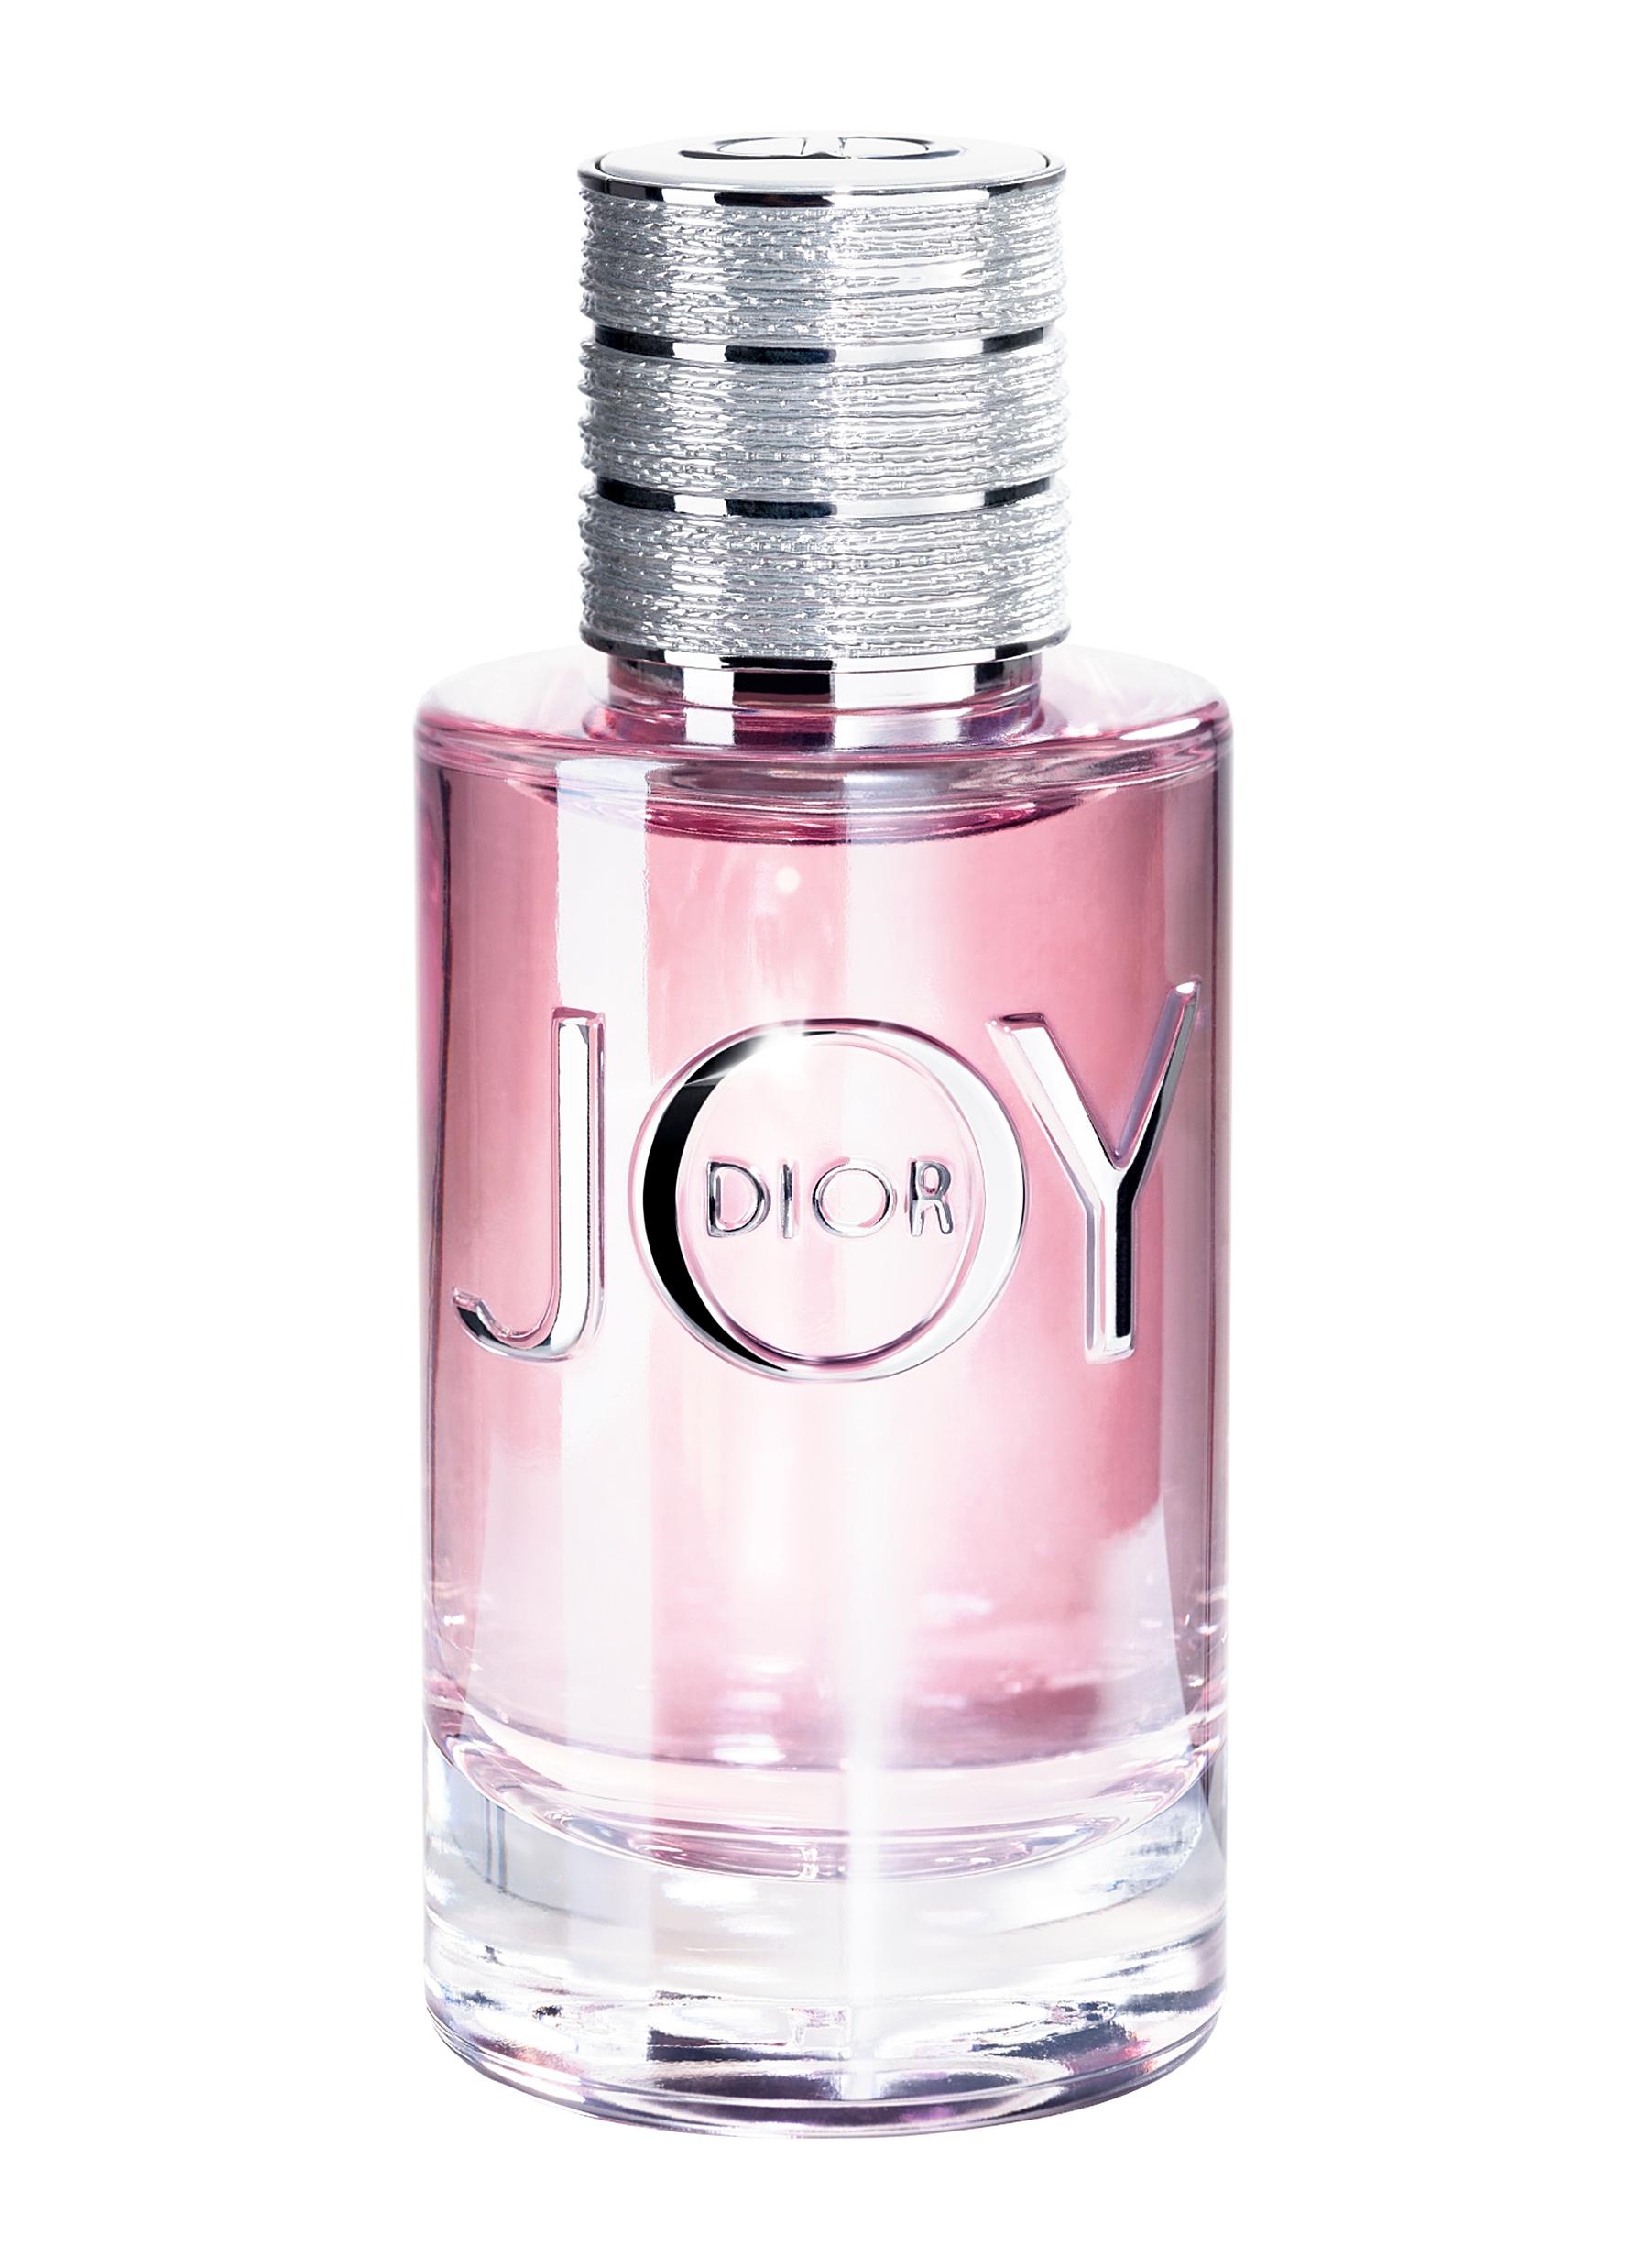 perfume dior joy